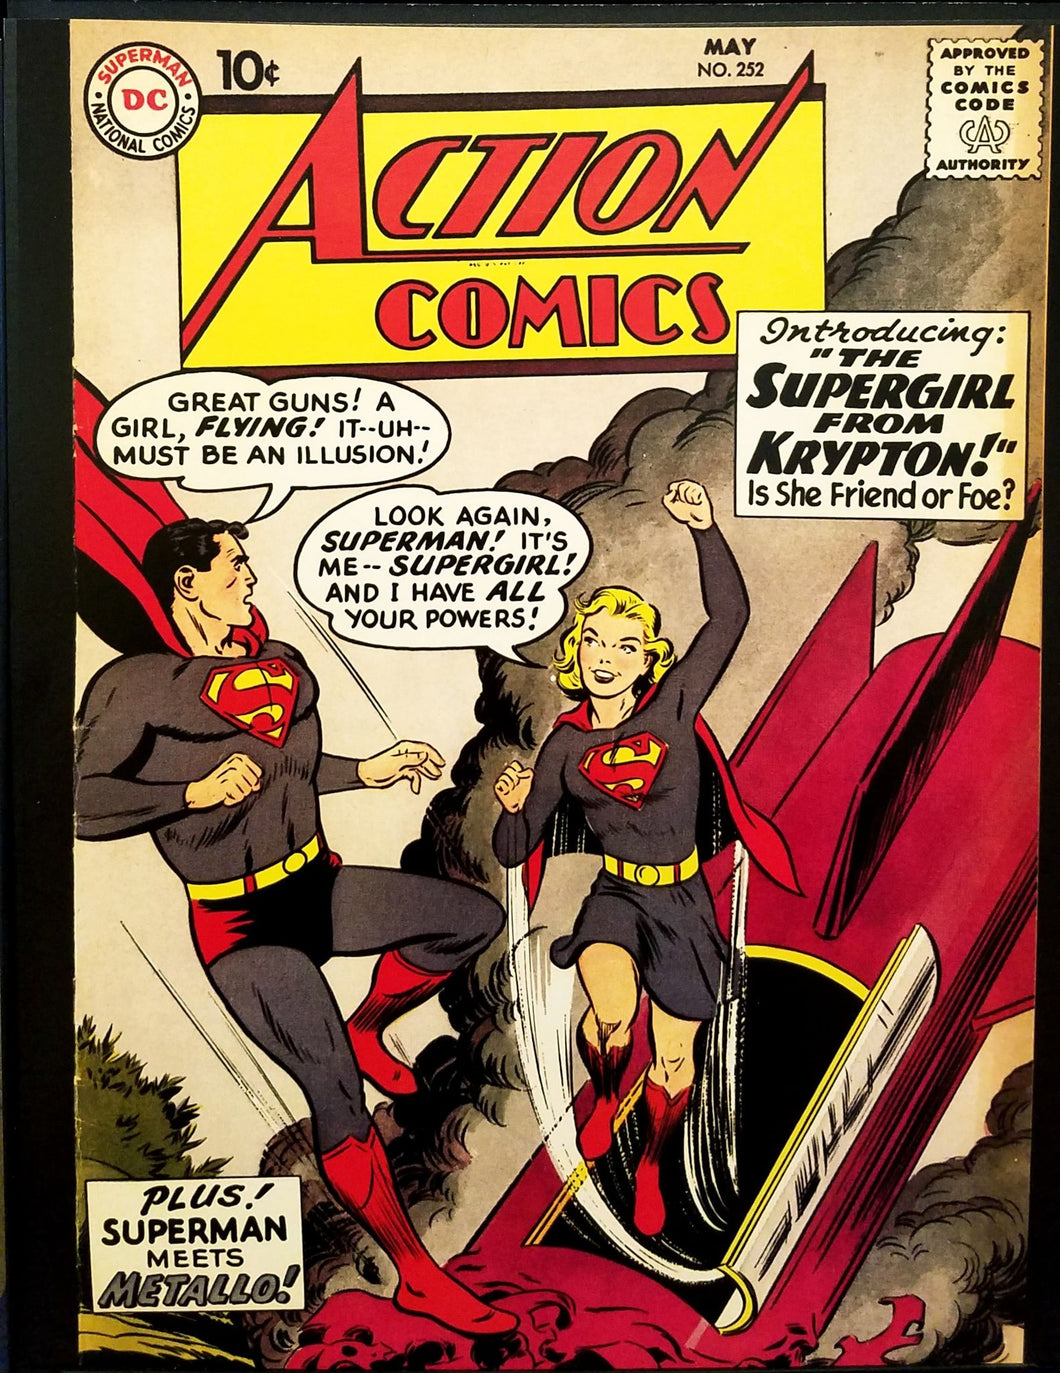 Action Comics #252 w/ Supergirl by Curt Swan 11x14 FRAMED Art Print, Vintage 1959 DC Comics